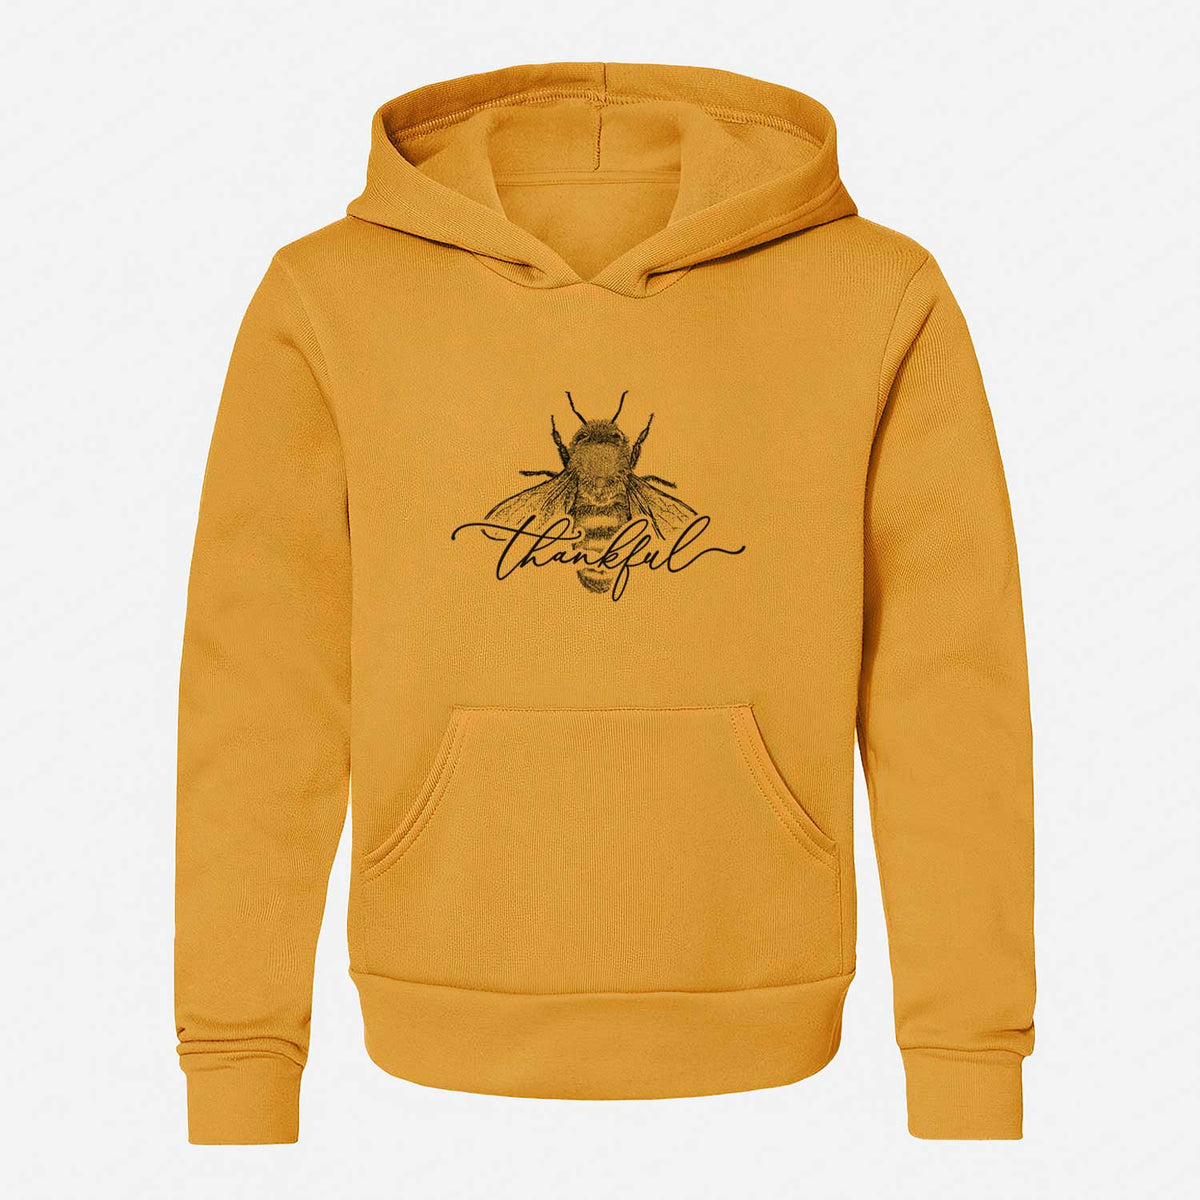 Bee Thankful - Youth Hoodie Sweatshirt